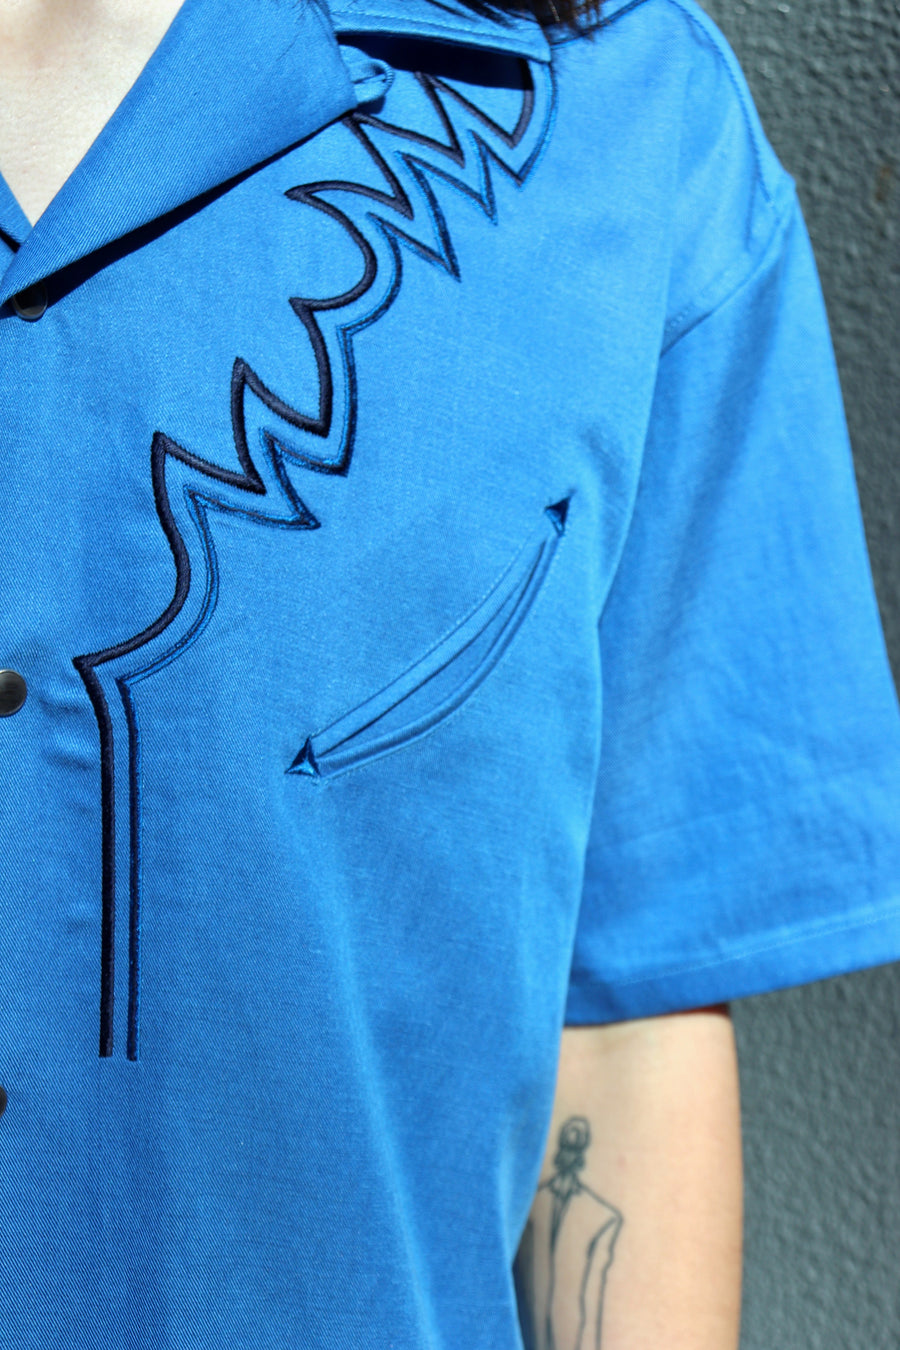 TOGA VIRILIS  Embroidery western S/S shirt(L.BLUE)